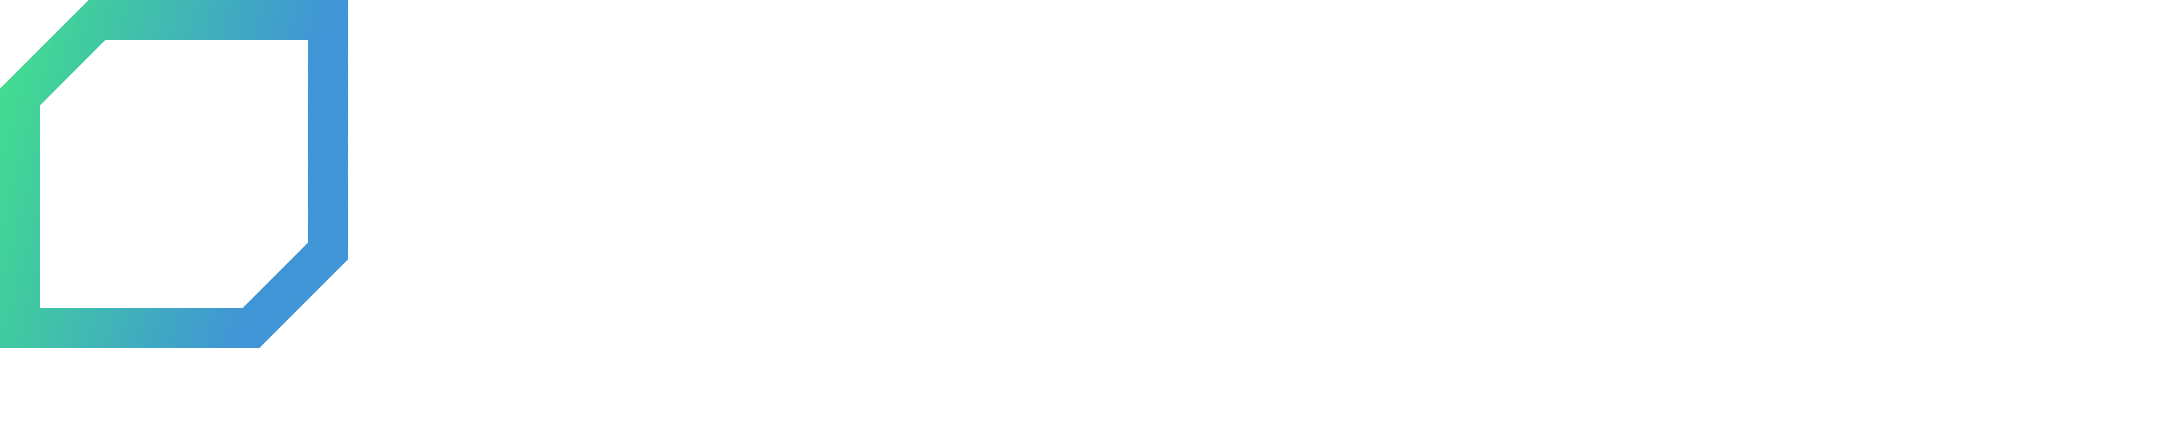 BlockSplit logo